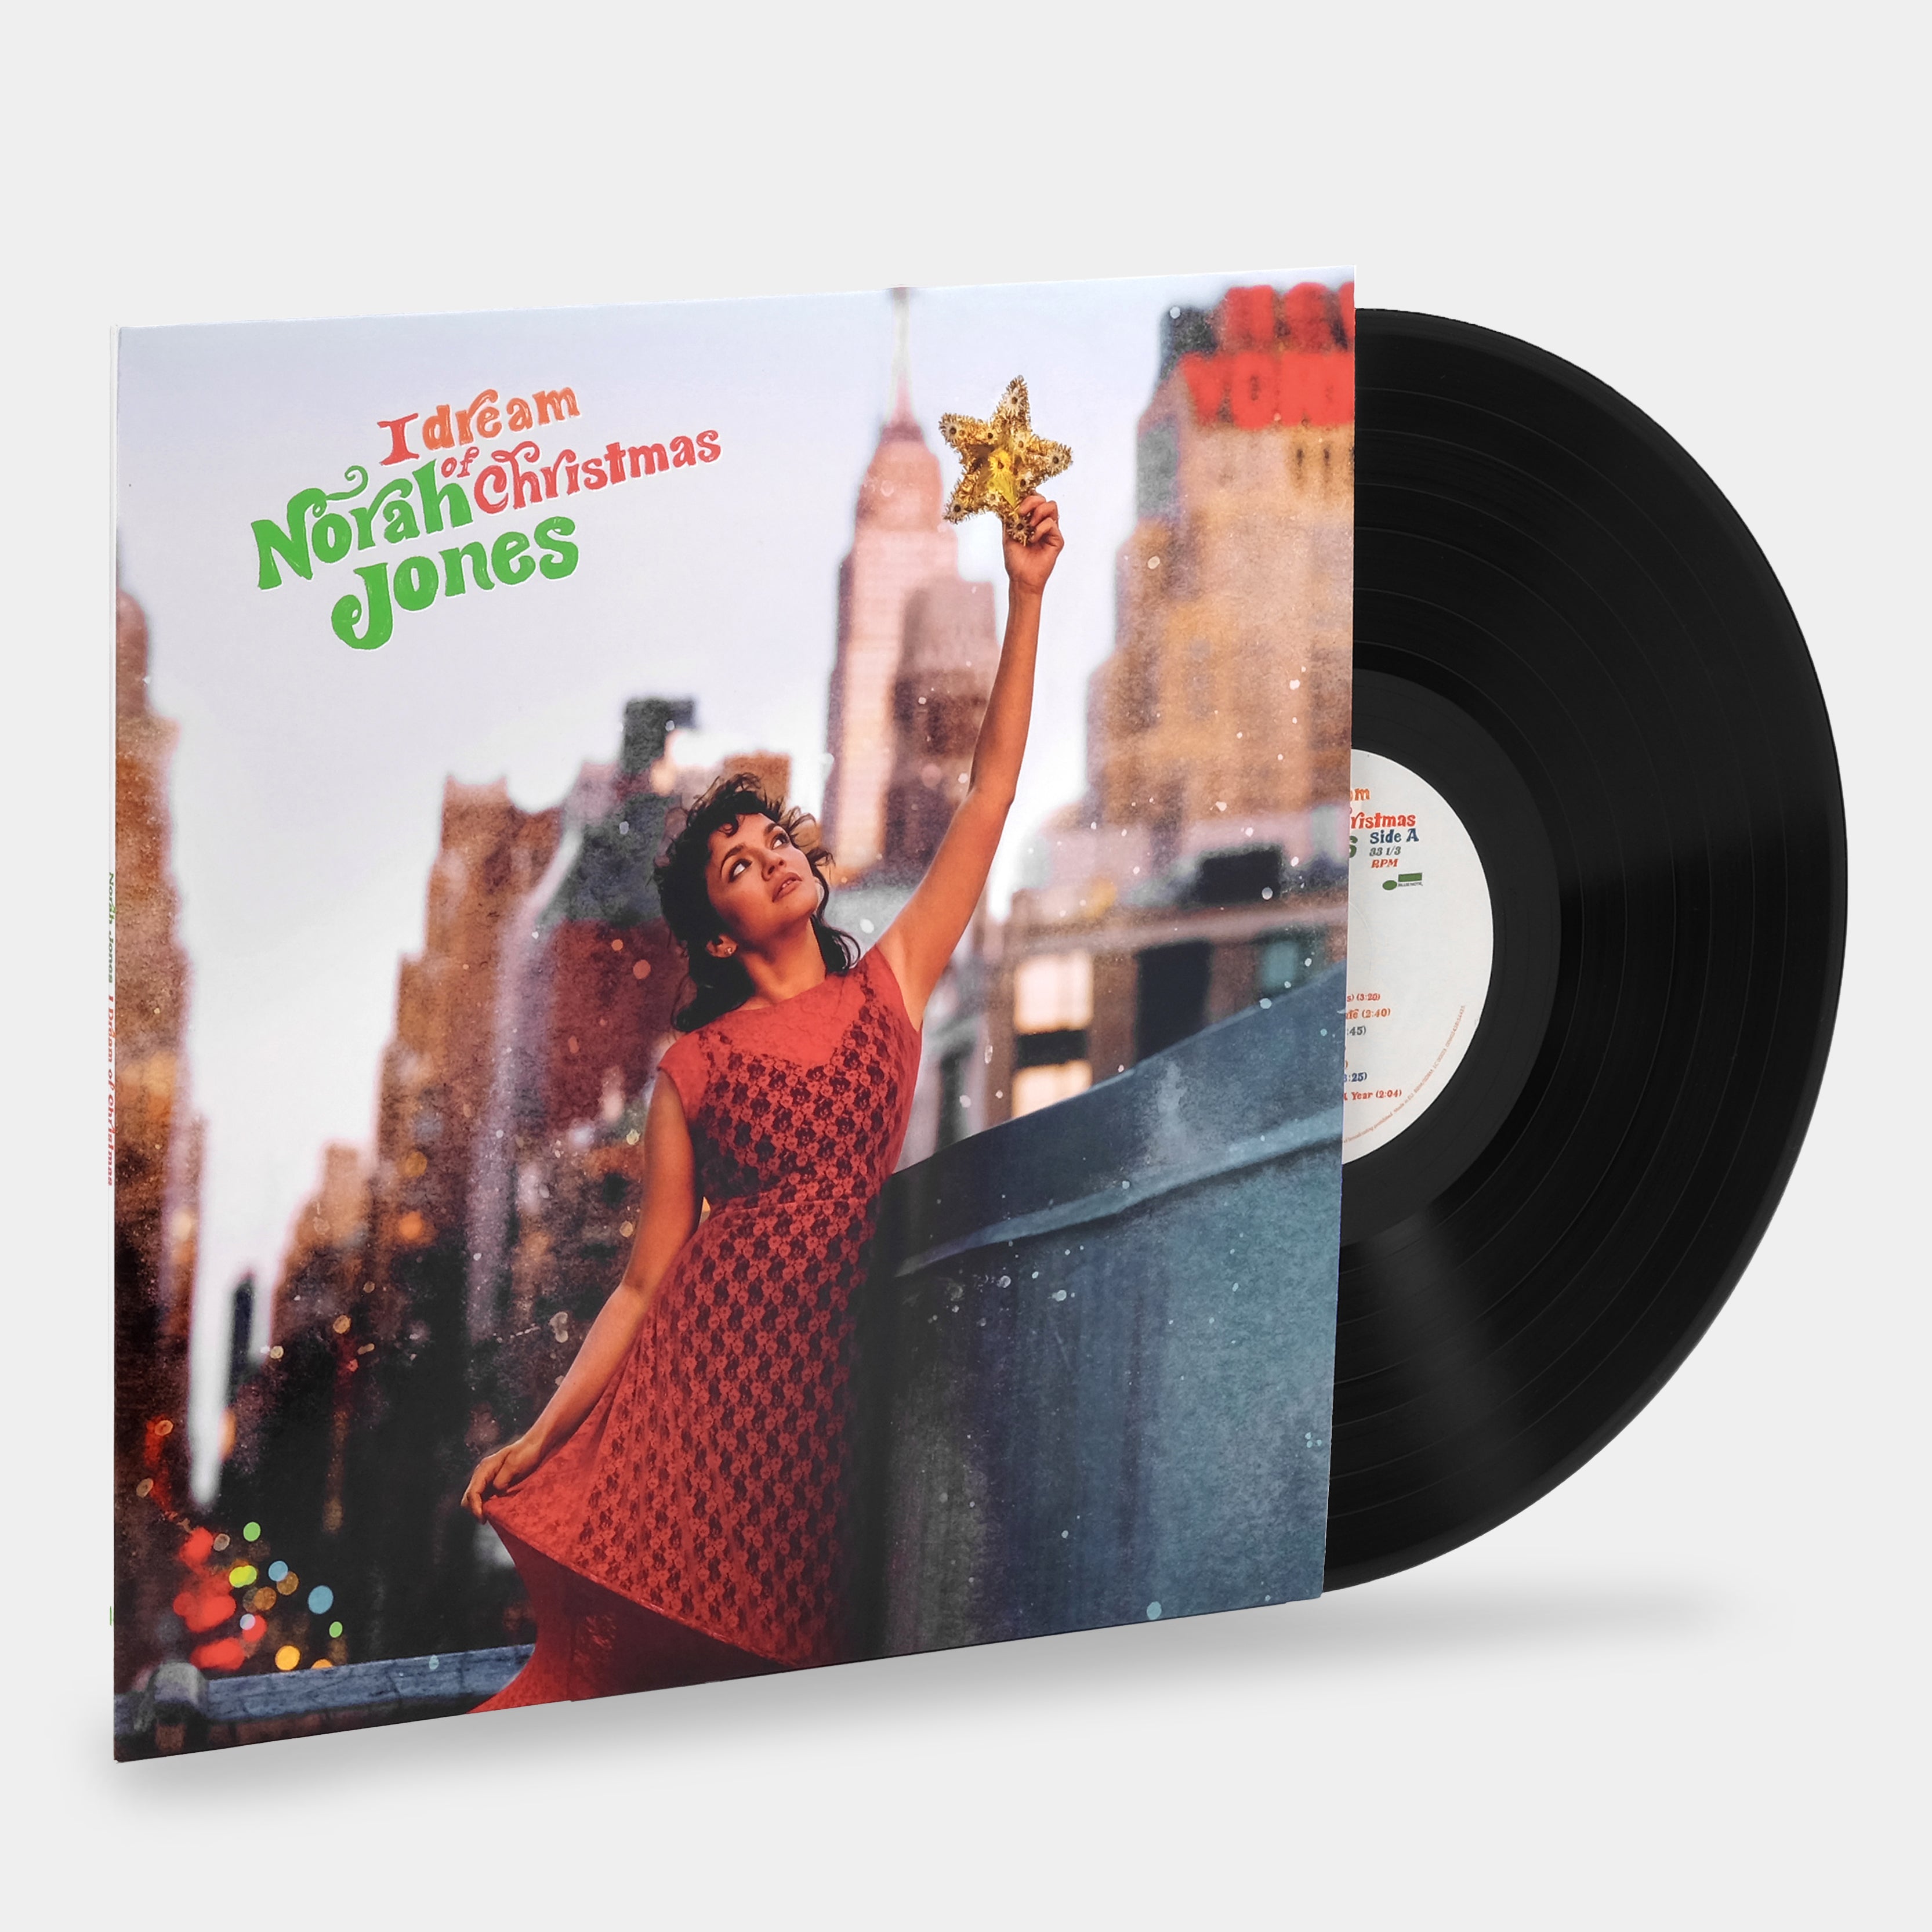 Norah Jones - I Dream Of Christmas LP Vinyl Record